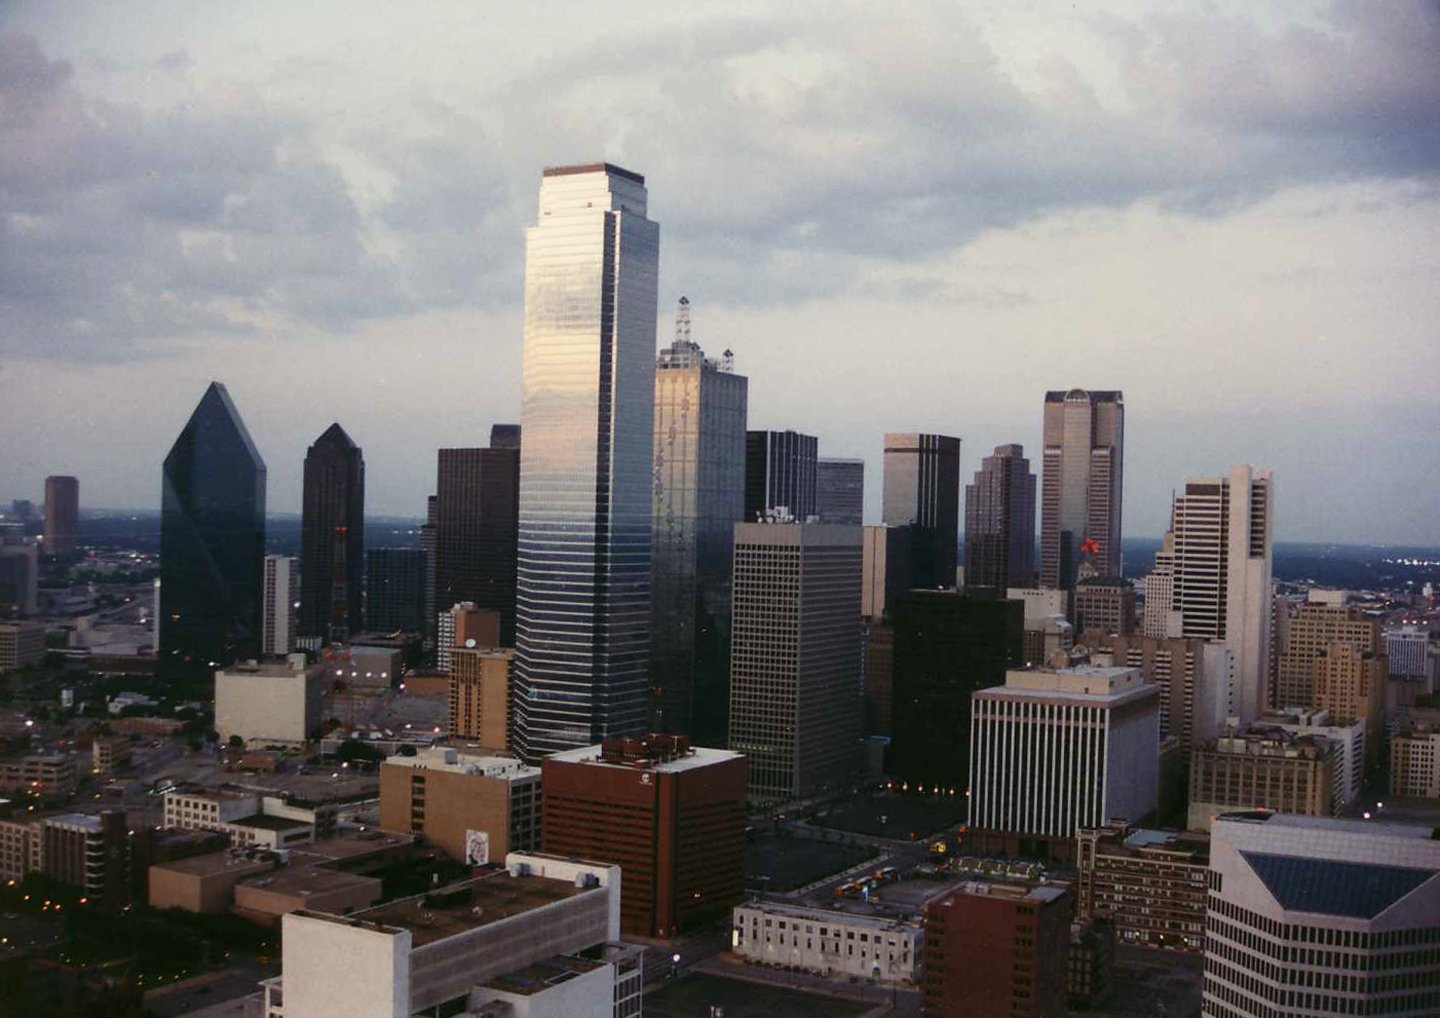 Downtown Dallas